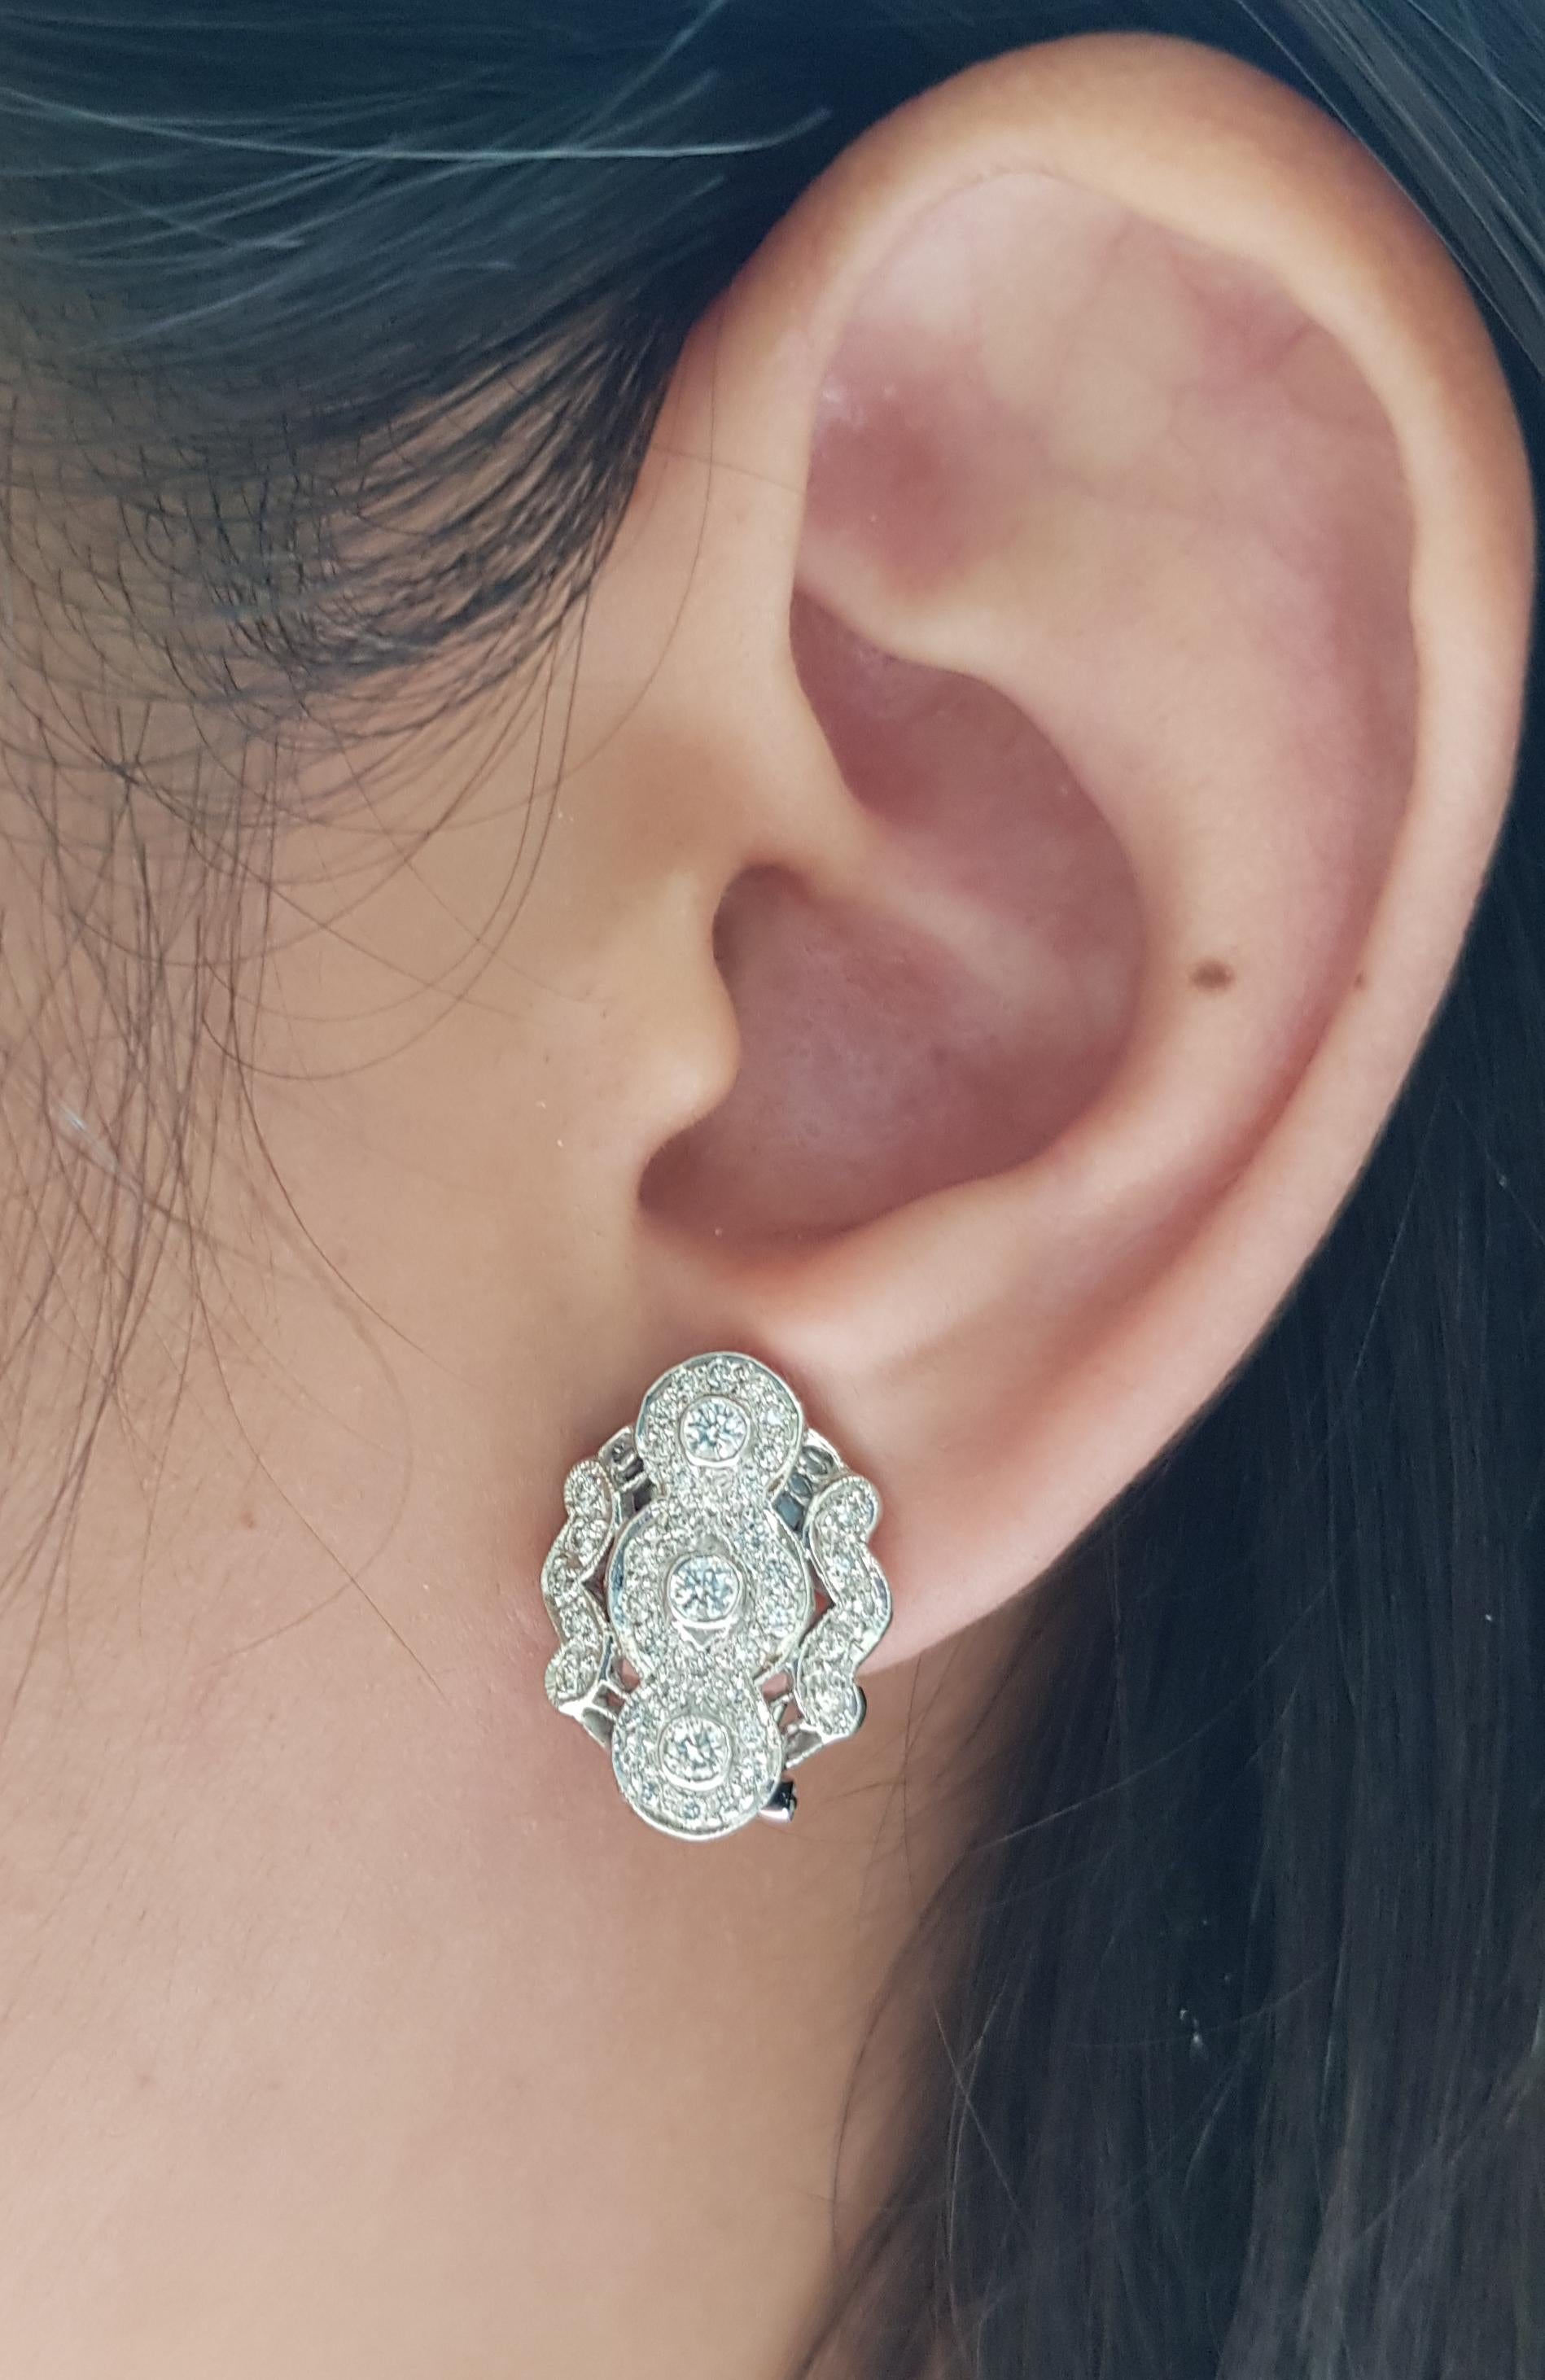 Diamond 1.14 carats Earrings set in 18 Karat White Gold Settings

Width:  1.5 cm 
Length: 1.9 cm
Total Weight: 10.71 grams

